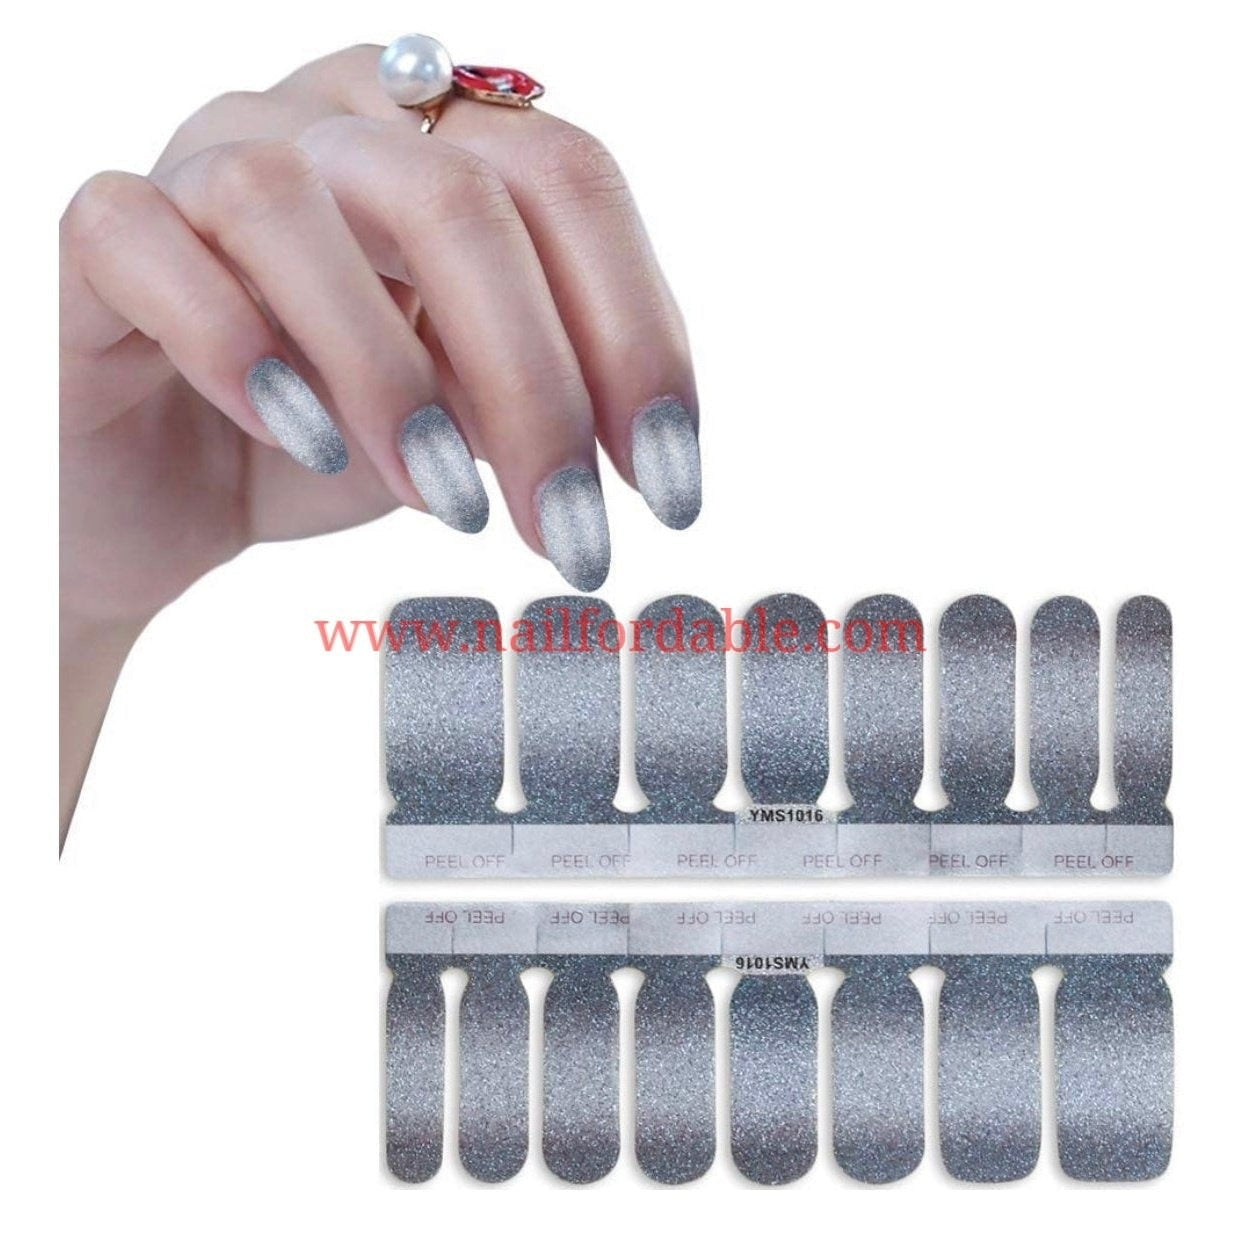 Gray gradient Nail Wraps | Semi Cured Gel Wraps | Gel Nail Wraps |Nail Polish | Nail Stickers